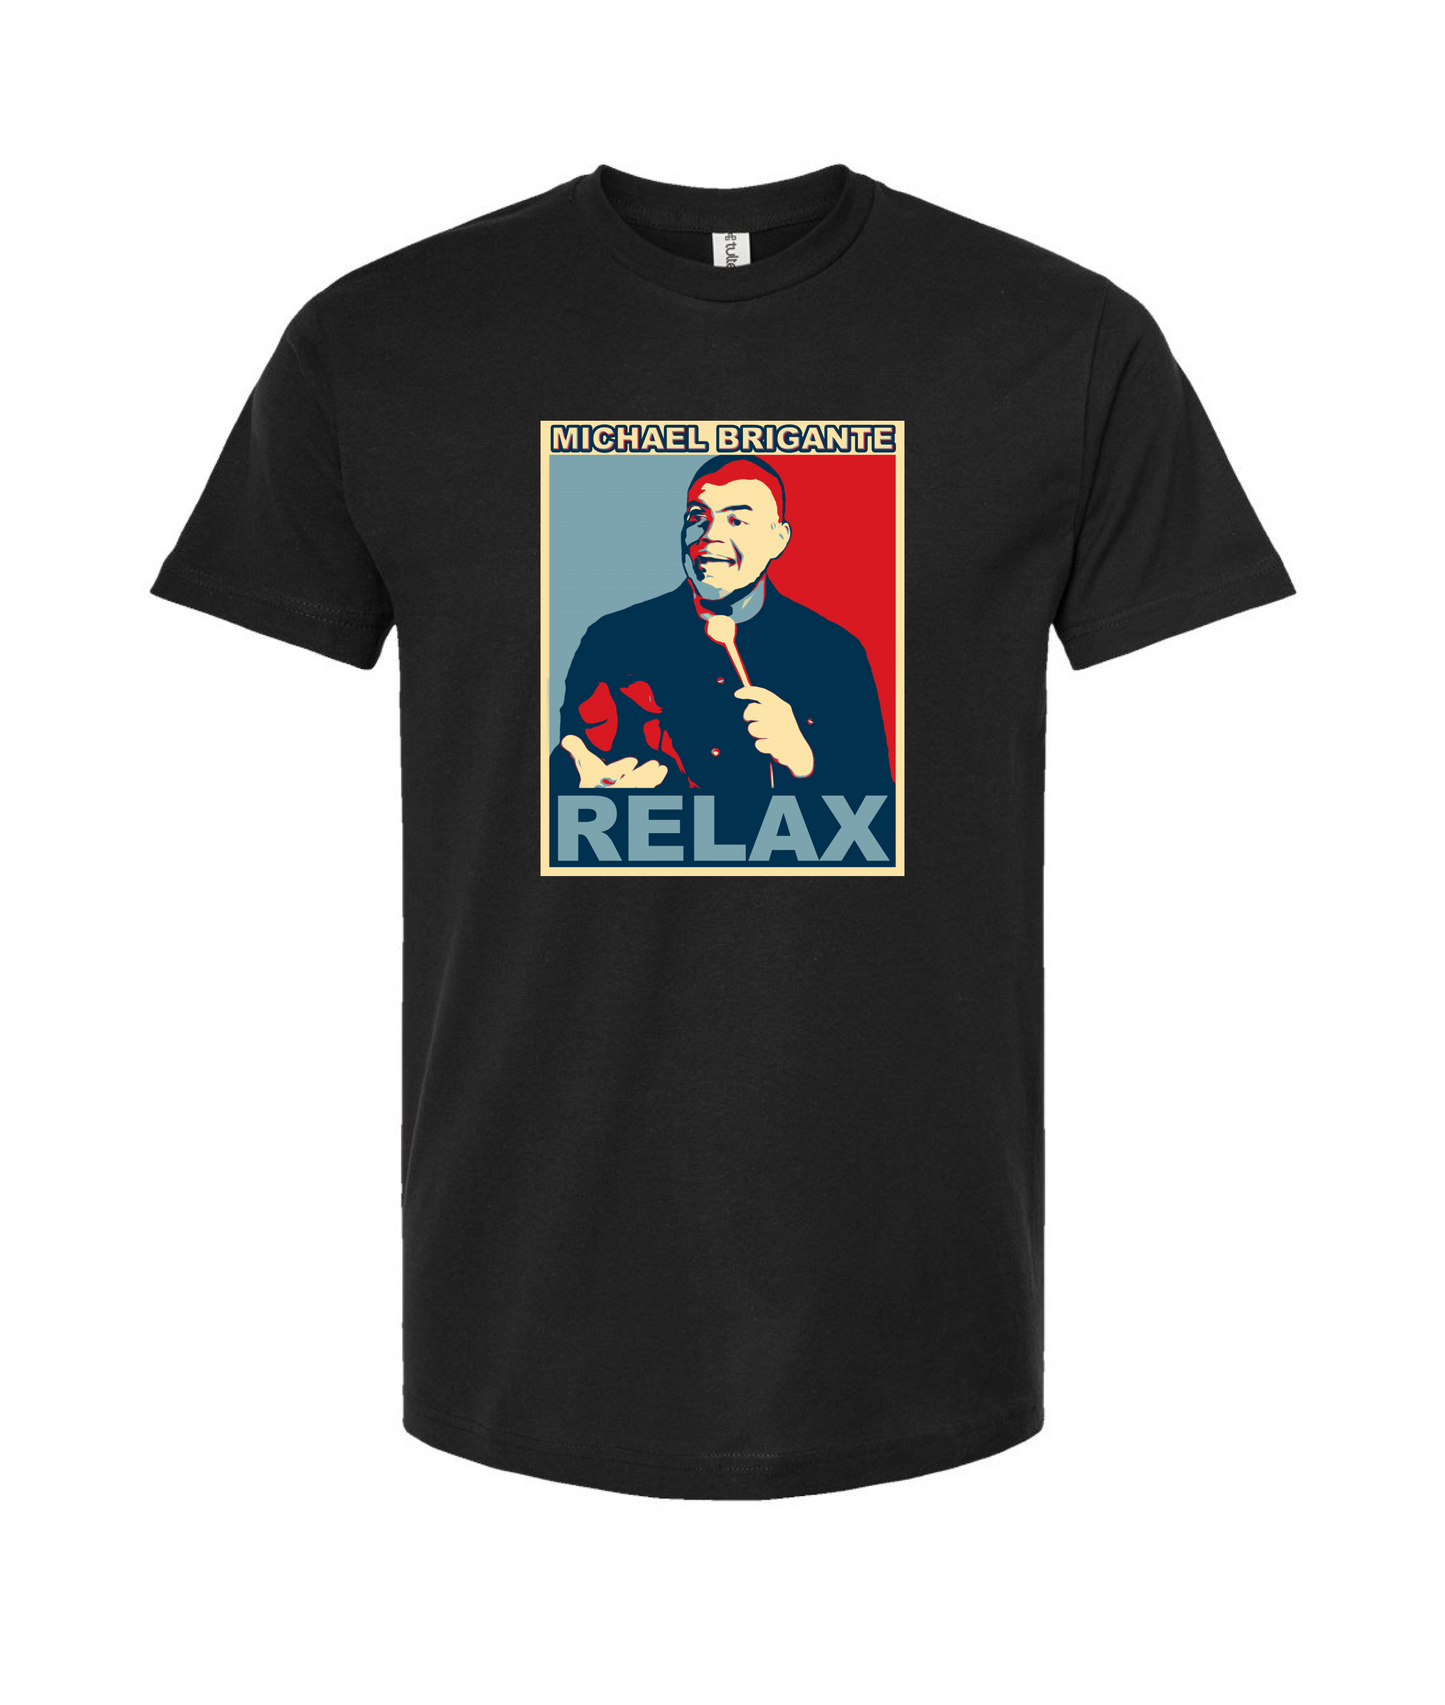 Michael Brigante - Relax - T-Shirt